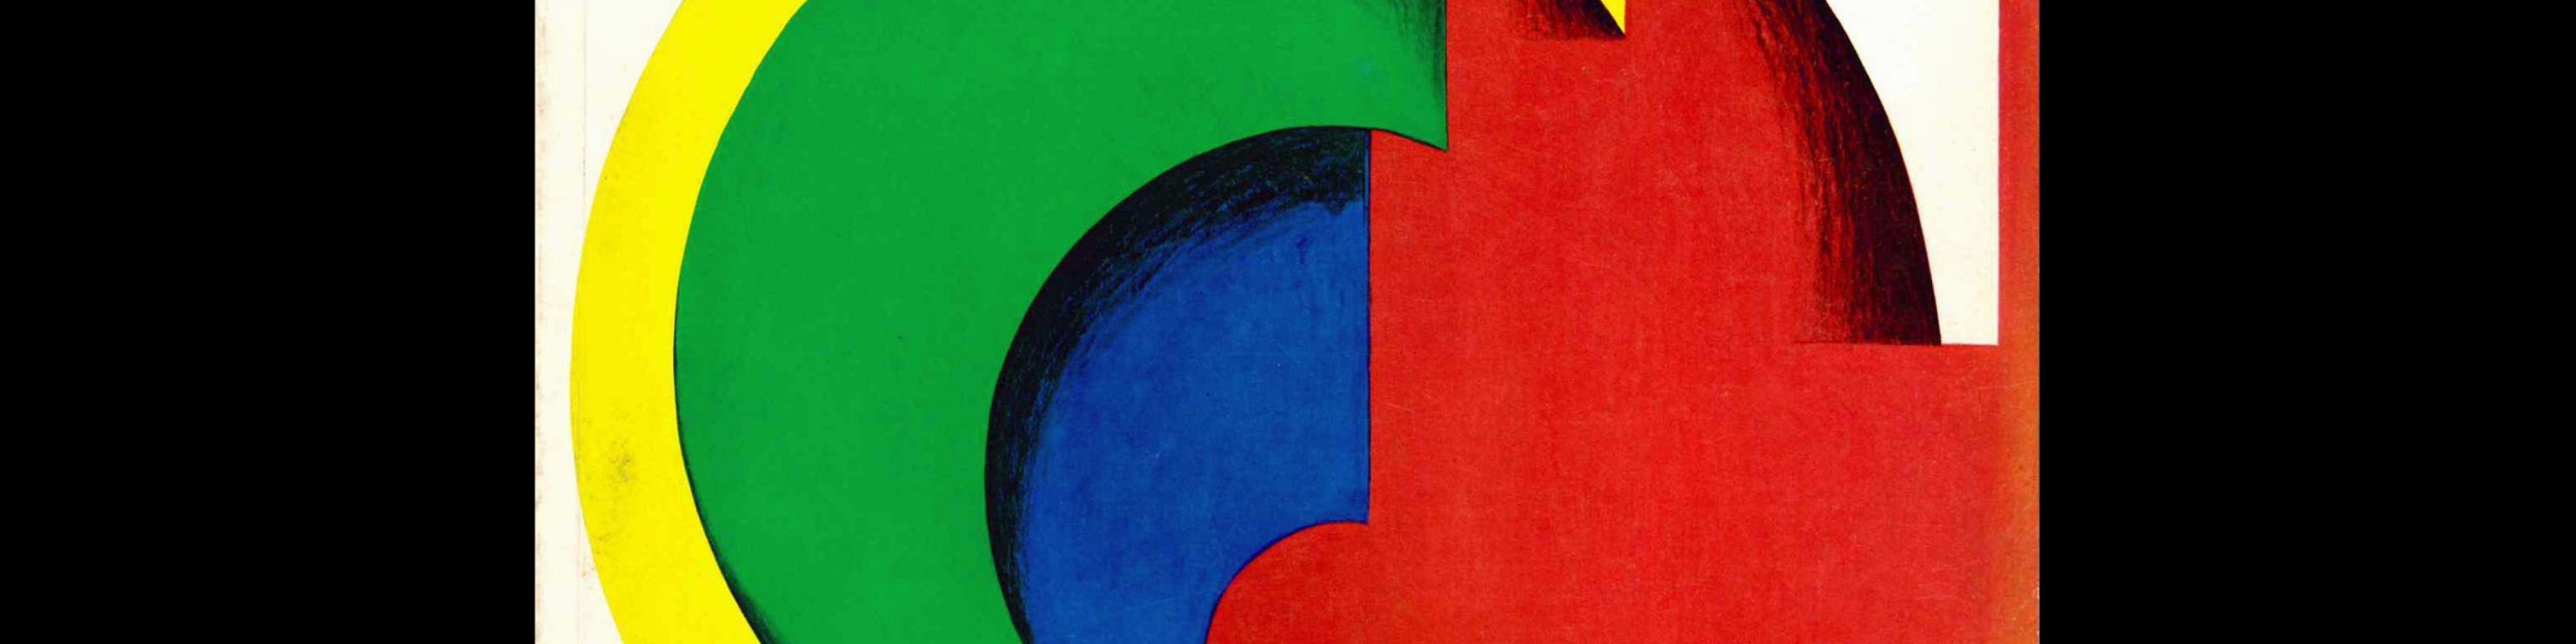 Gebrauchsgraphik, 6, 1969. Cover design by Toni Blank